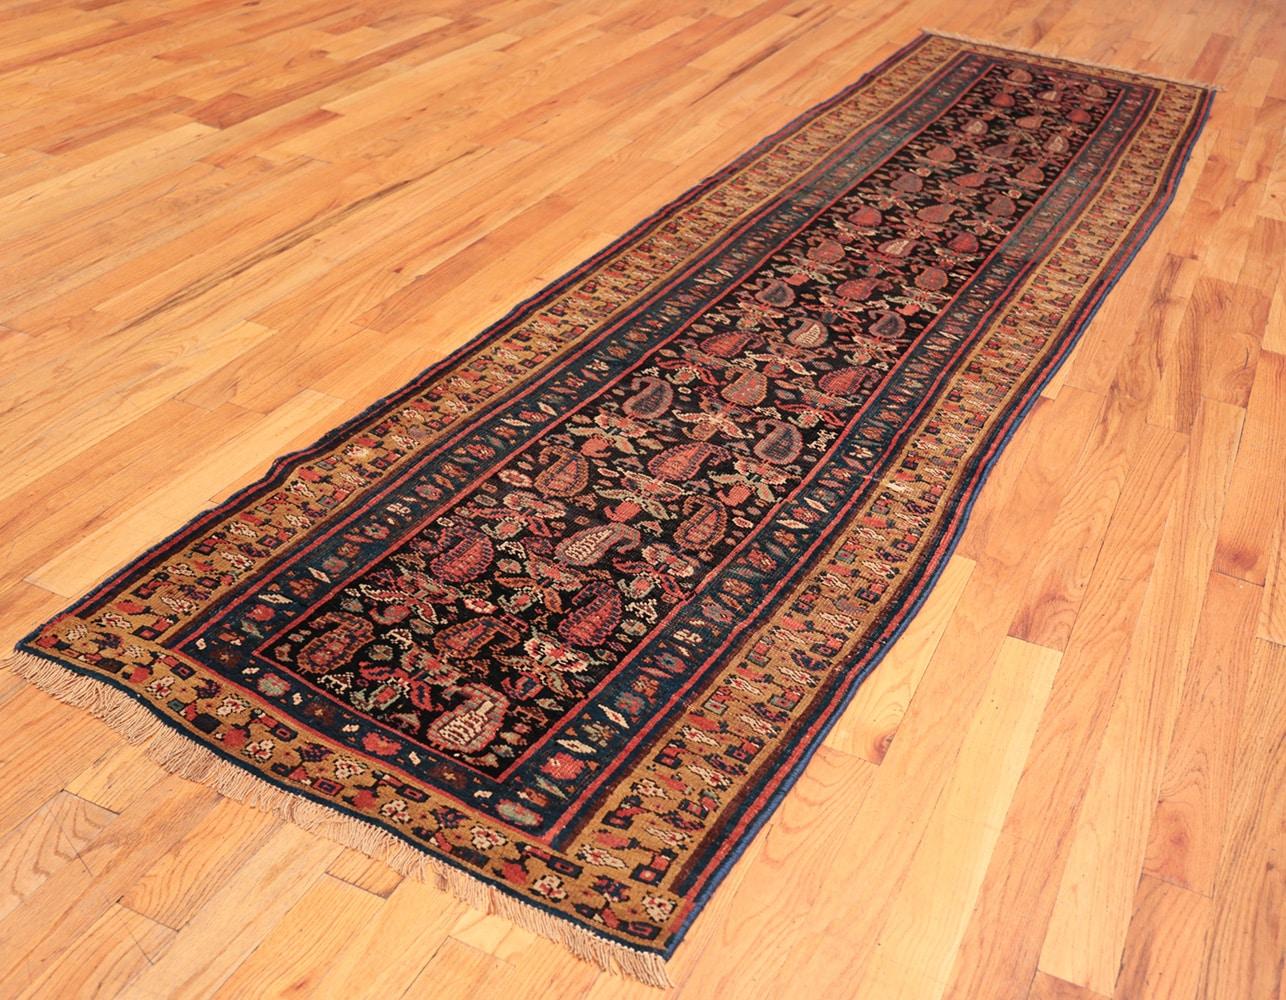 Antique Bidjar Persian Runner. Size: 3' 2